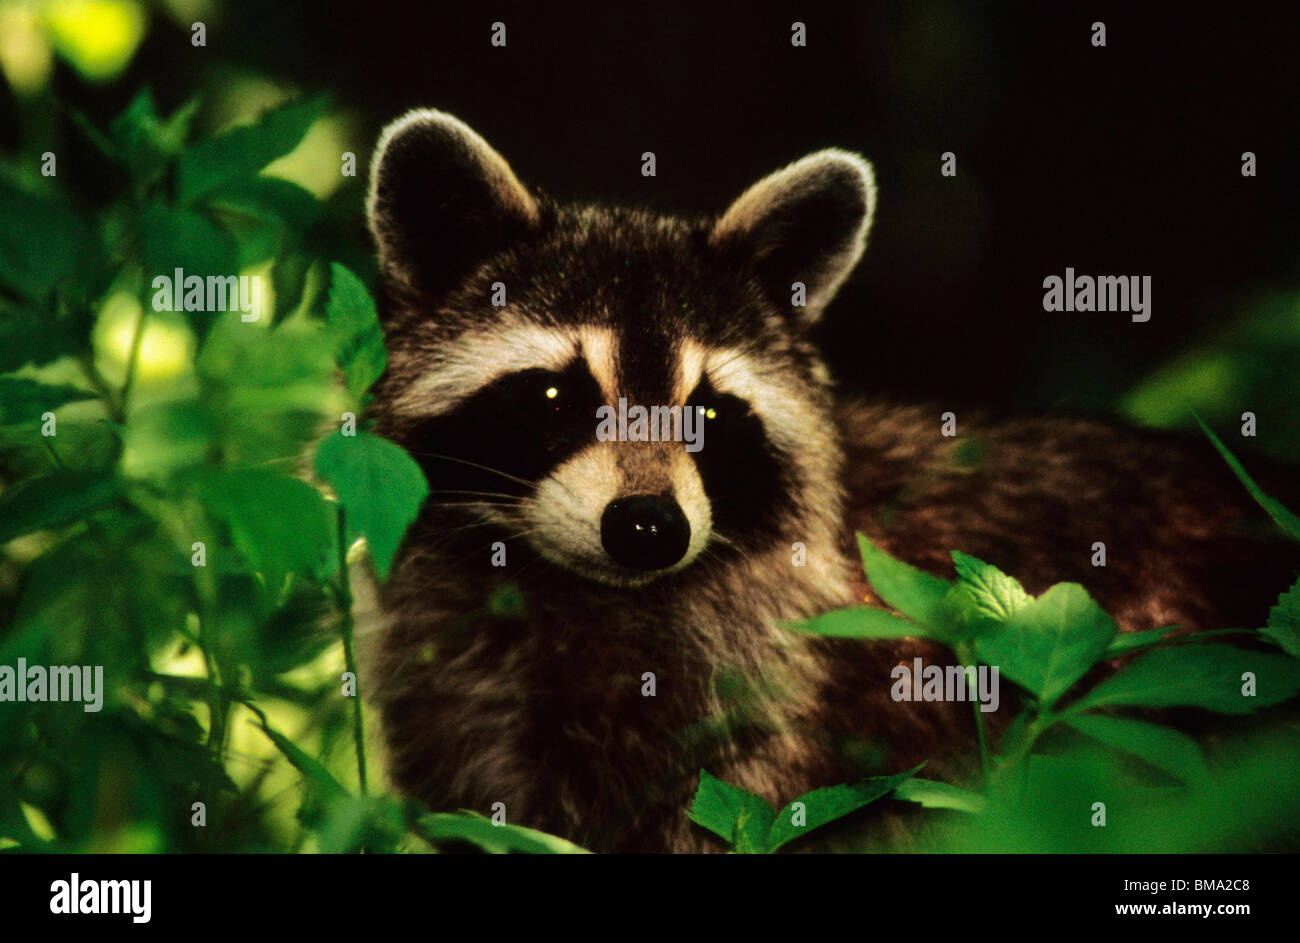 Raccoon in the wild. Stock Photo